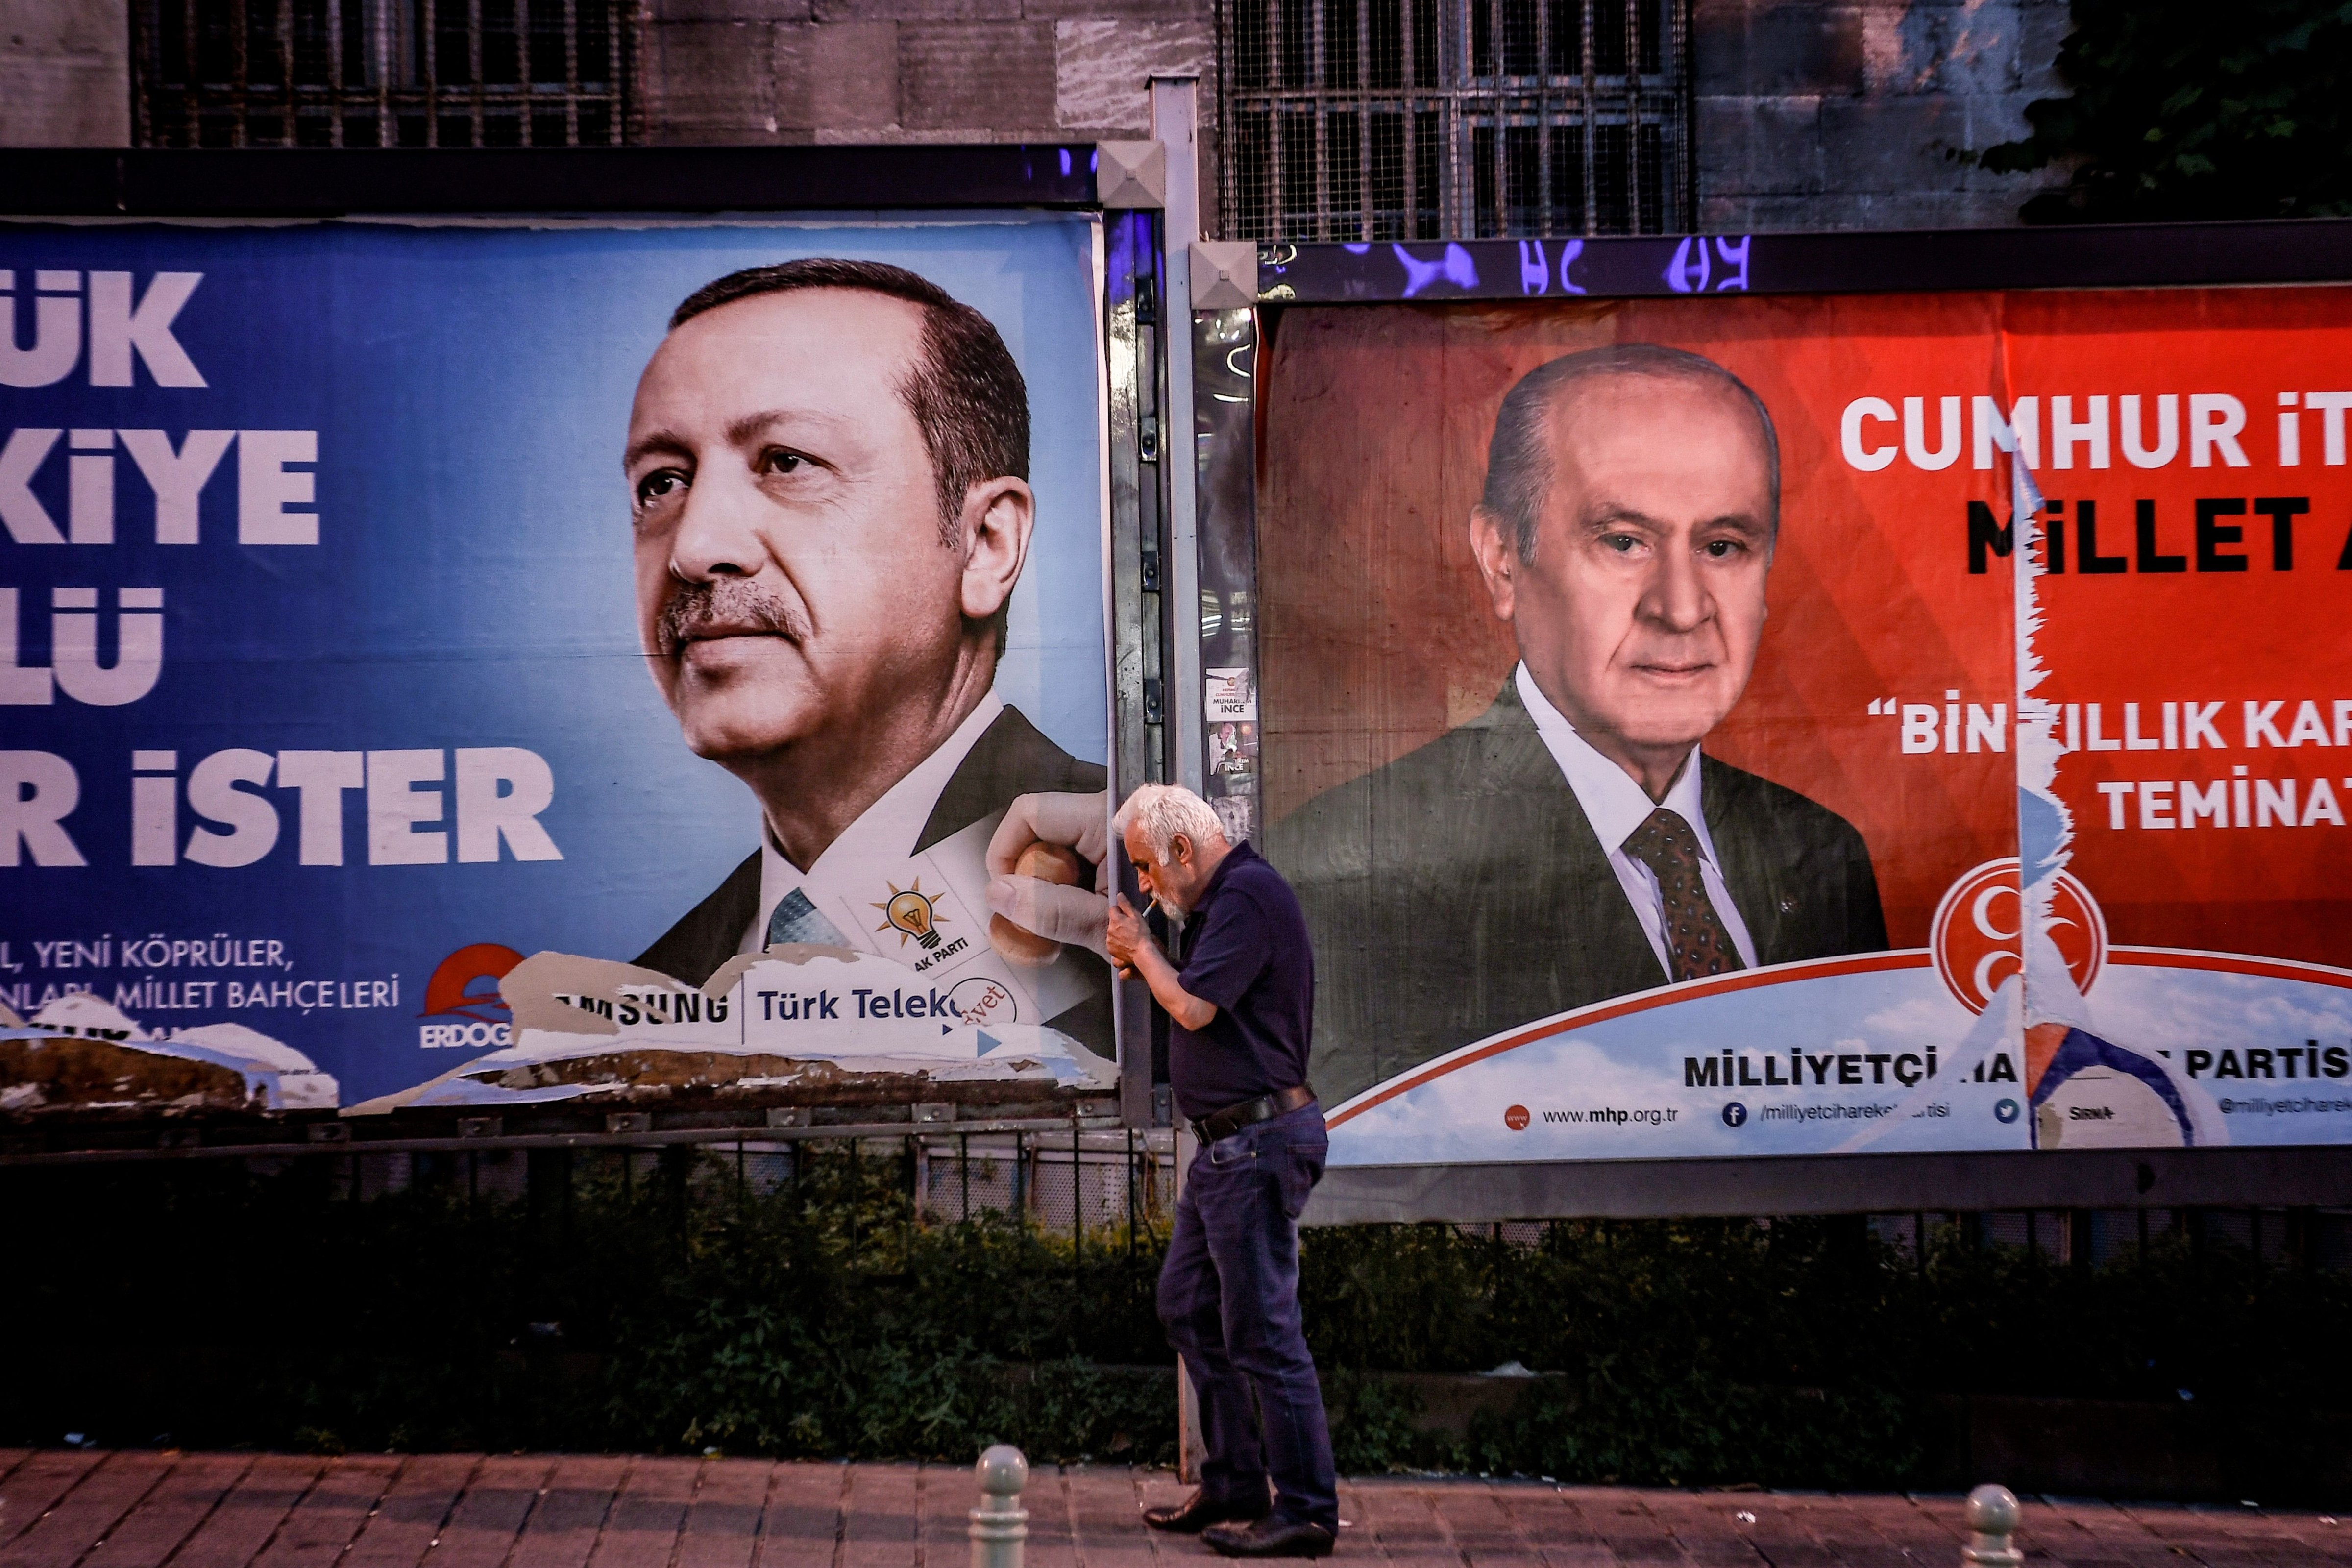 TURKEY-POLITICS-ELECTION